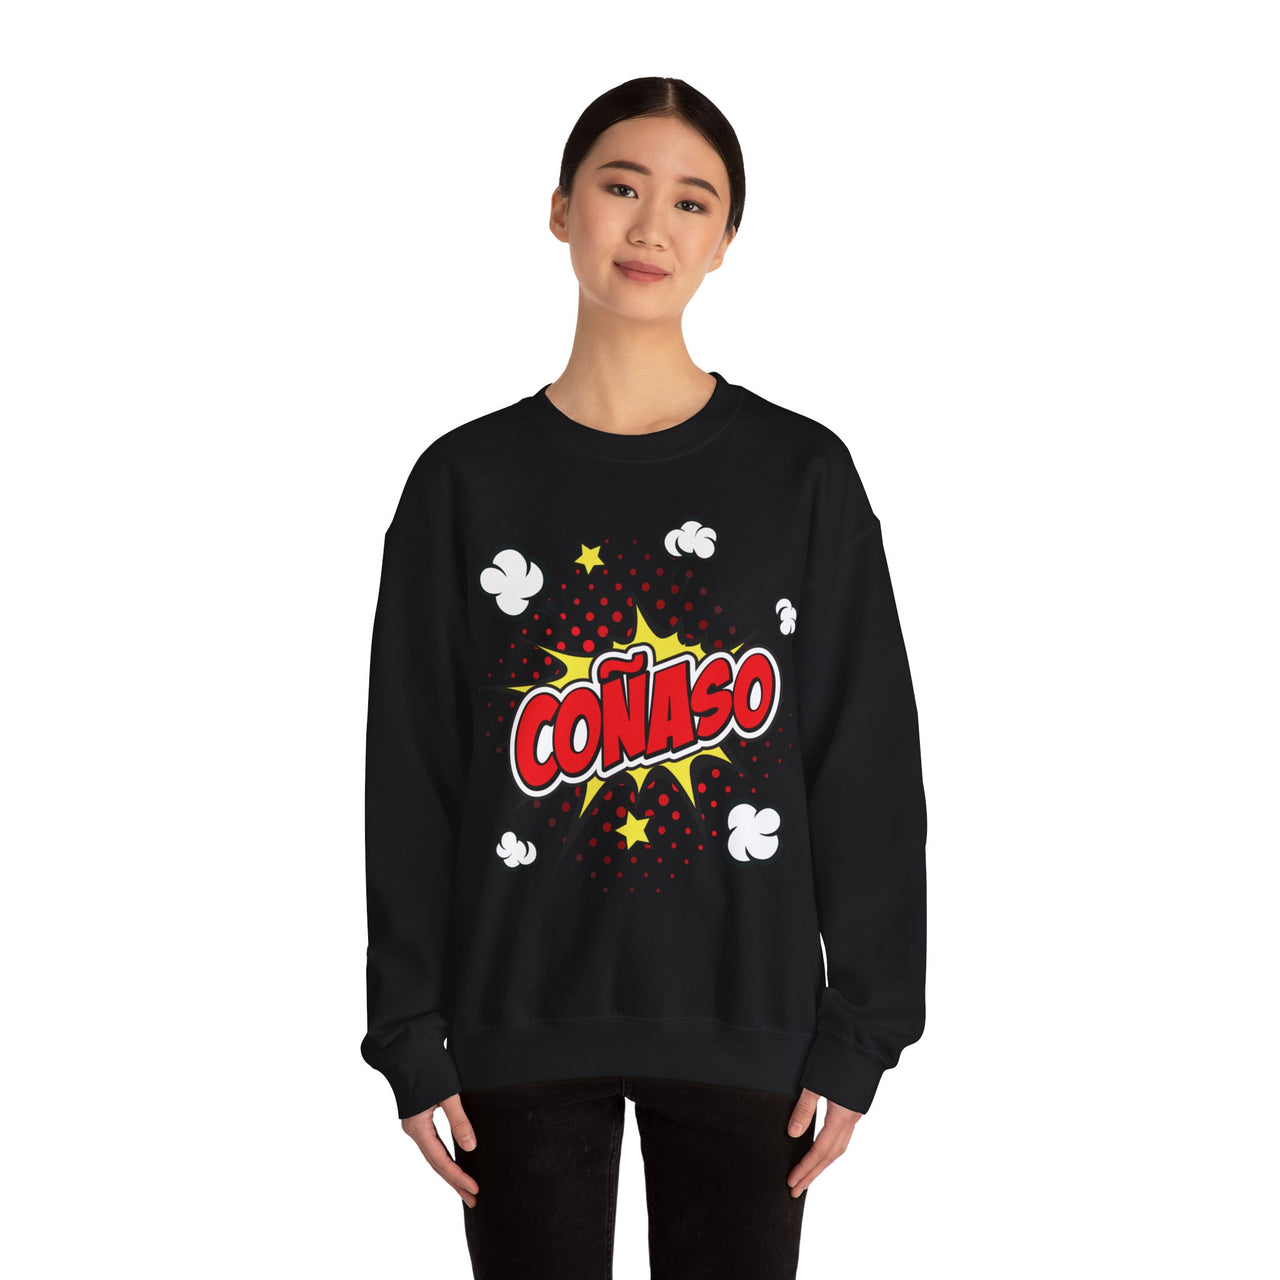 Coñaso Graphic Oversized Sweatshirt | Bold Latin Pride & Statement Wear